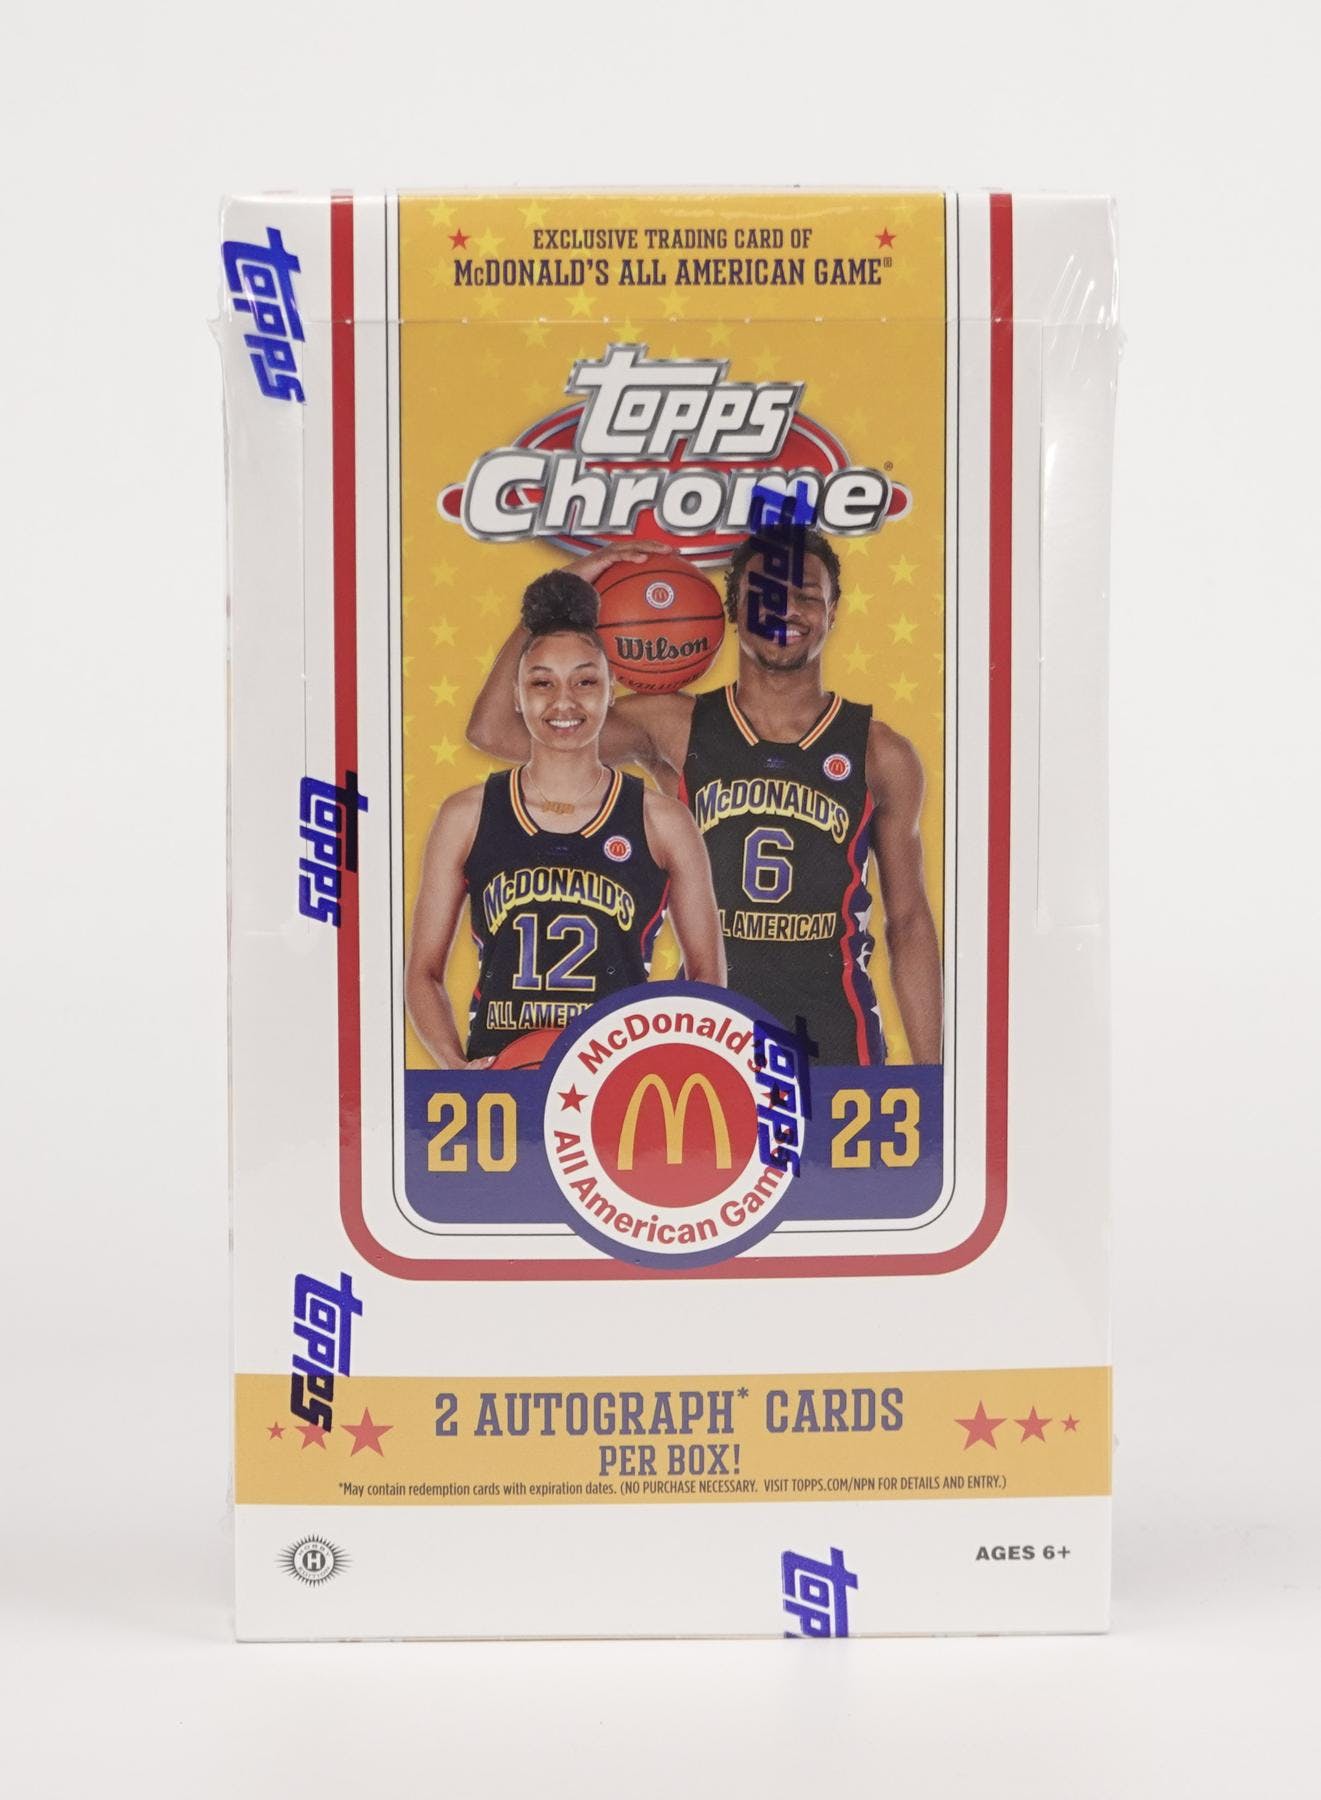 2023 Topps McDonald's All American Chrome Basketball Hobby Box